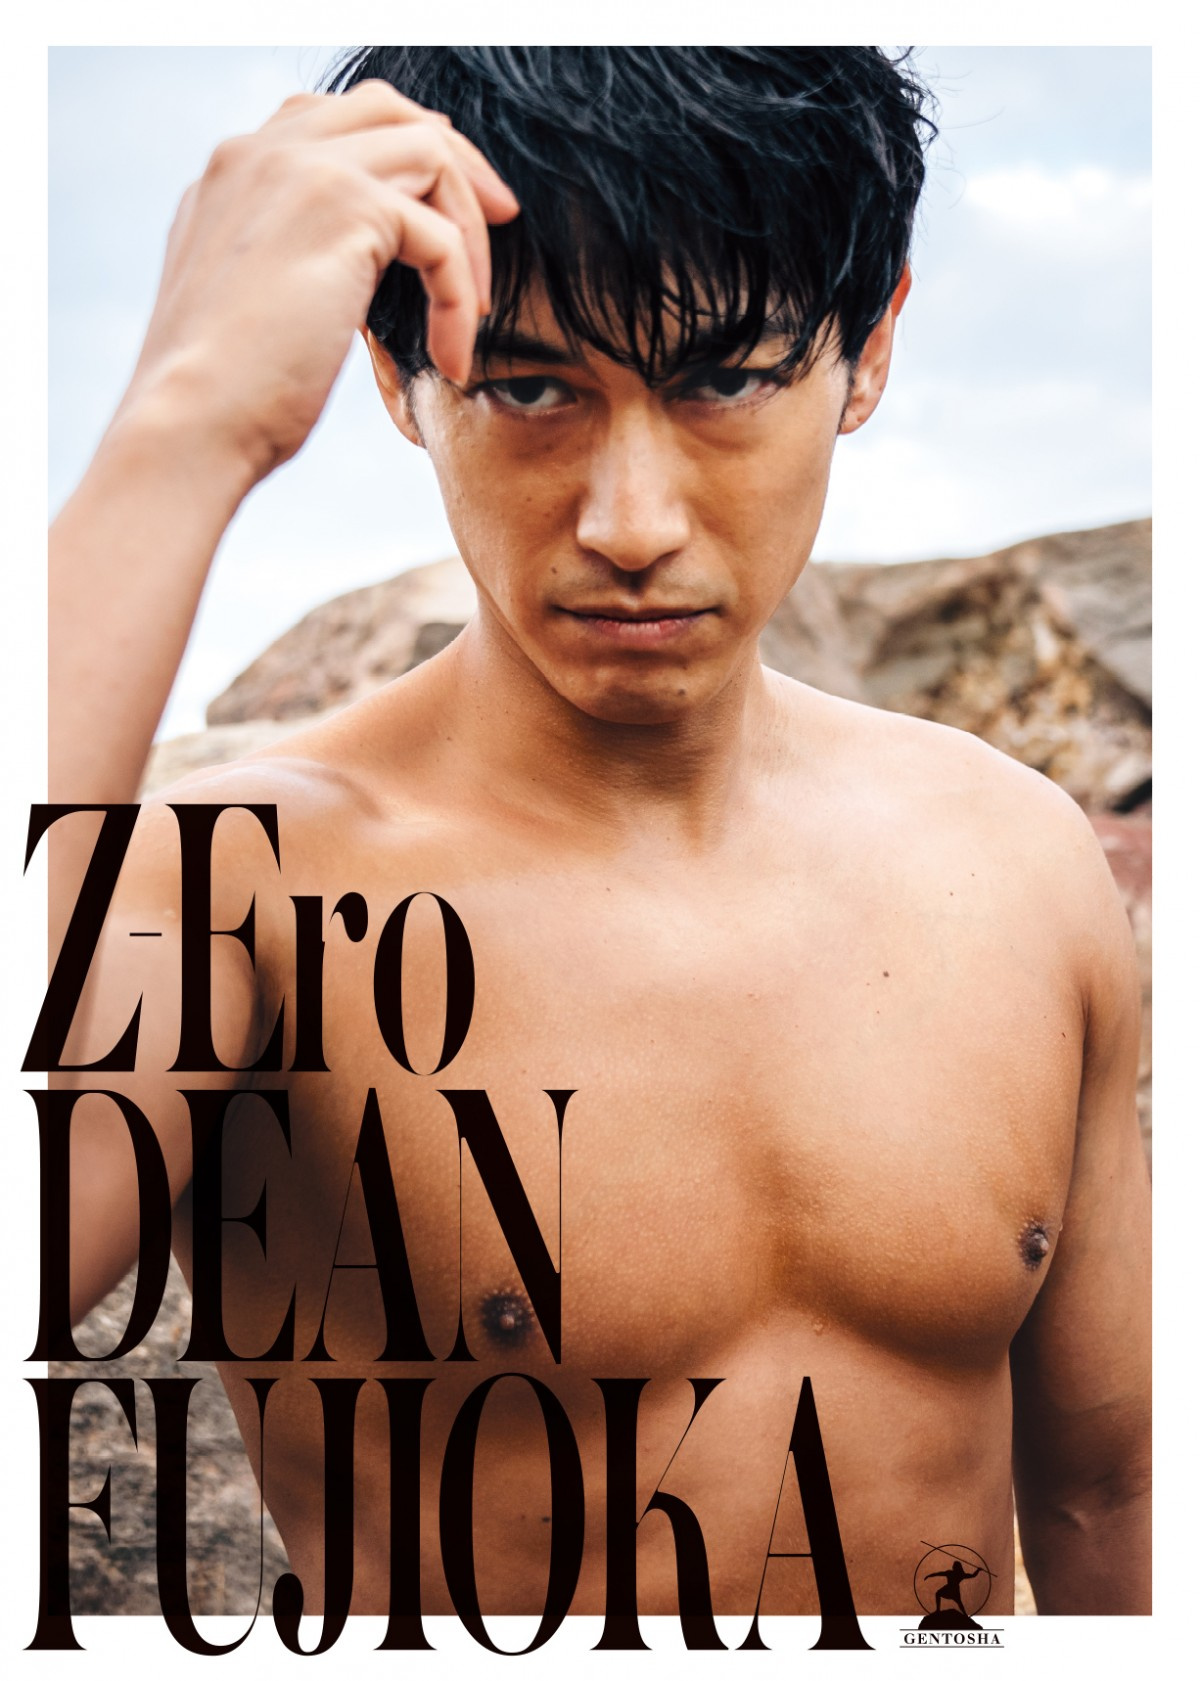 Deanfujioka 胸筋 腹筋 上腕二頭筋 無駄削ぎ落した筋肉美披露 初写真集の表紙解禁 Oricon News